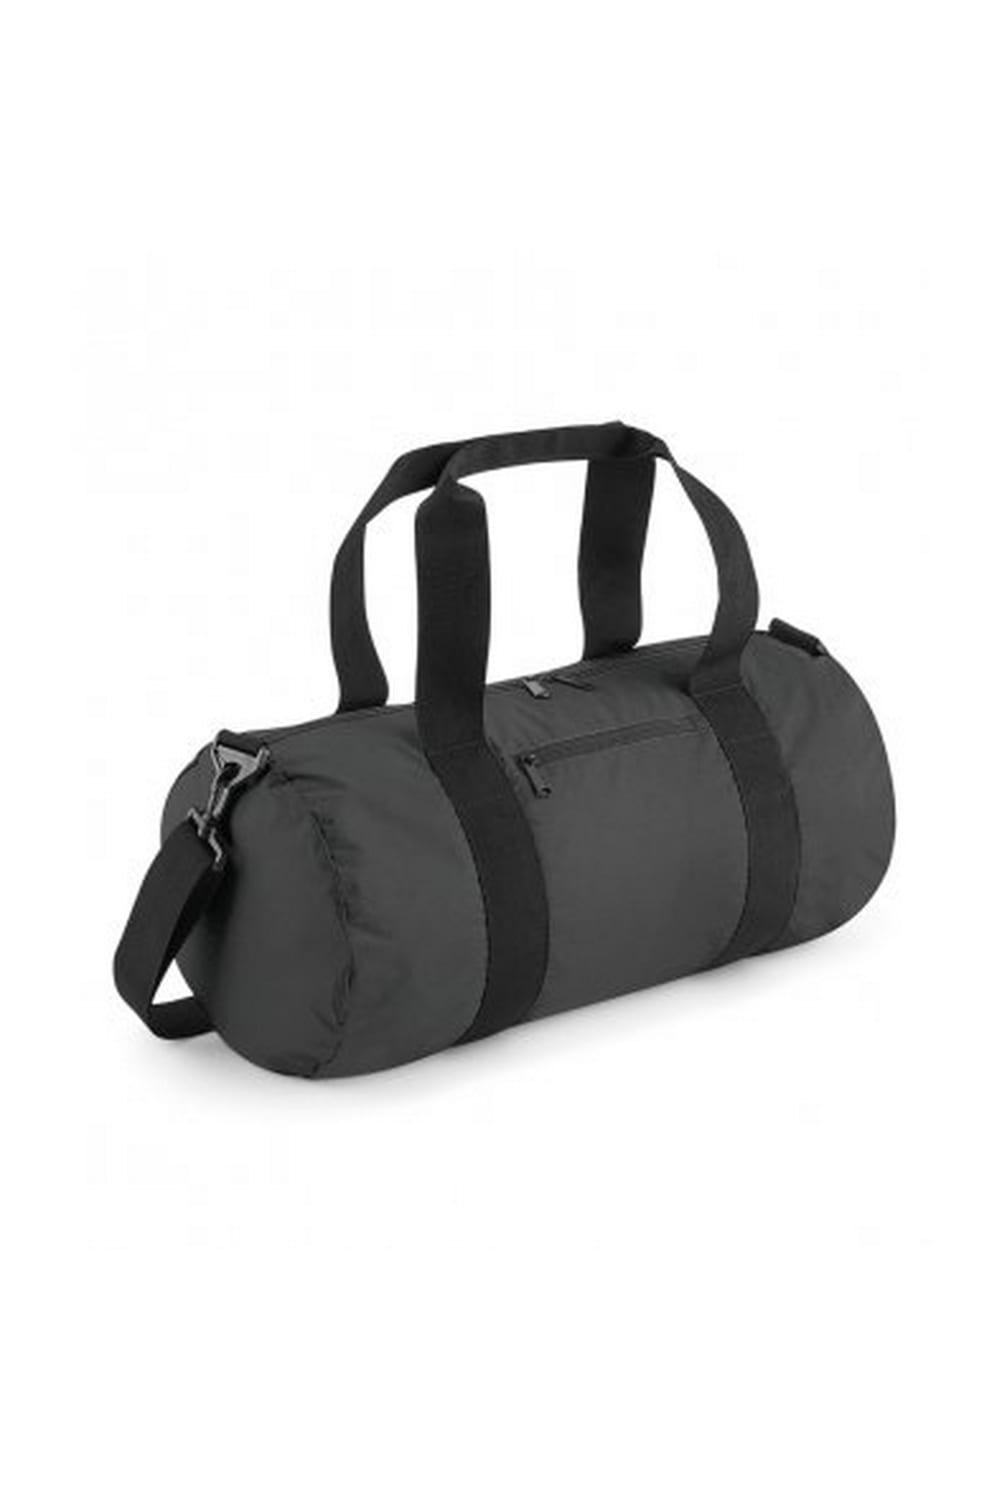 Bagbase Reflective Barrel Bag (Black/Reflective) (One Size)